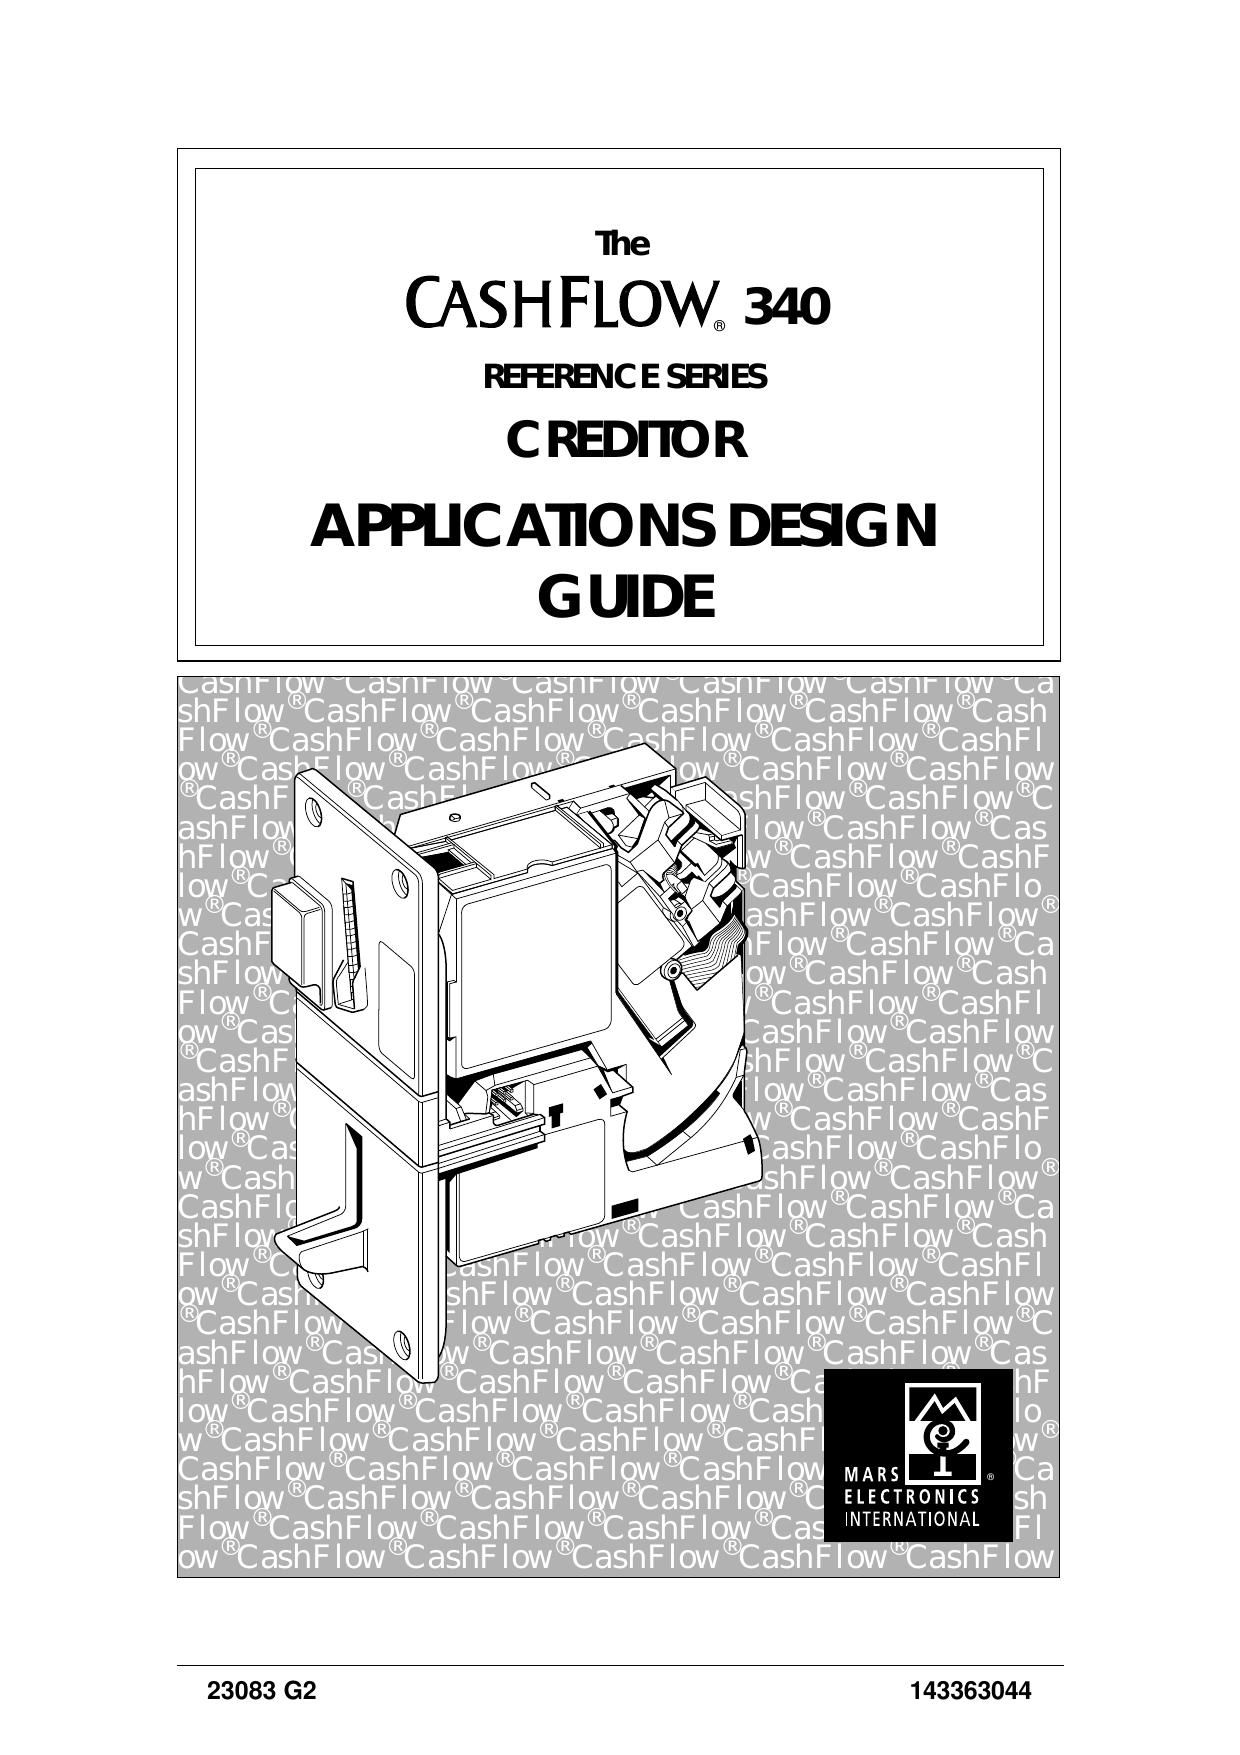 CF340 Creditor Applications Design Guide GB